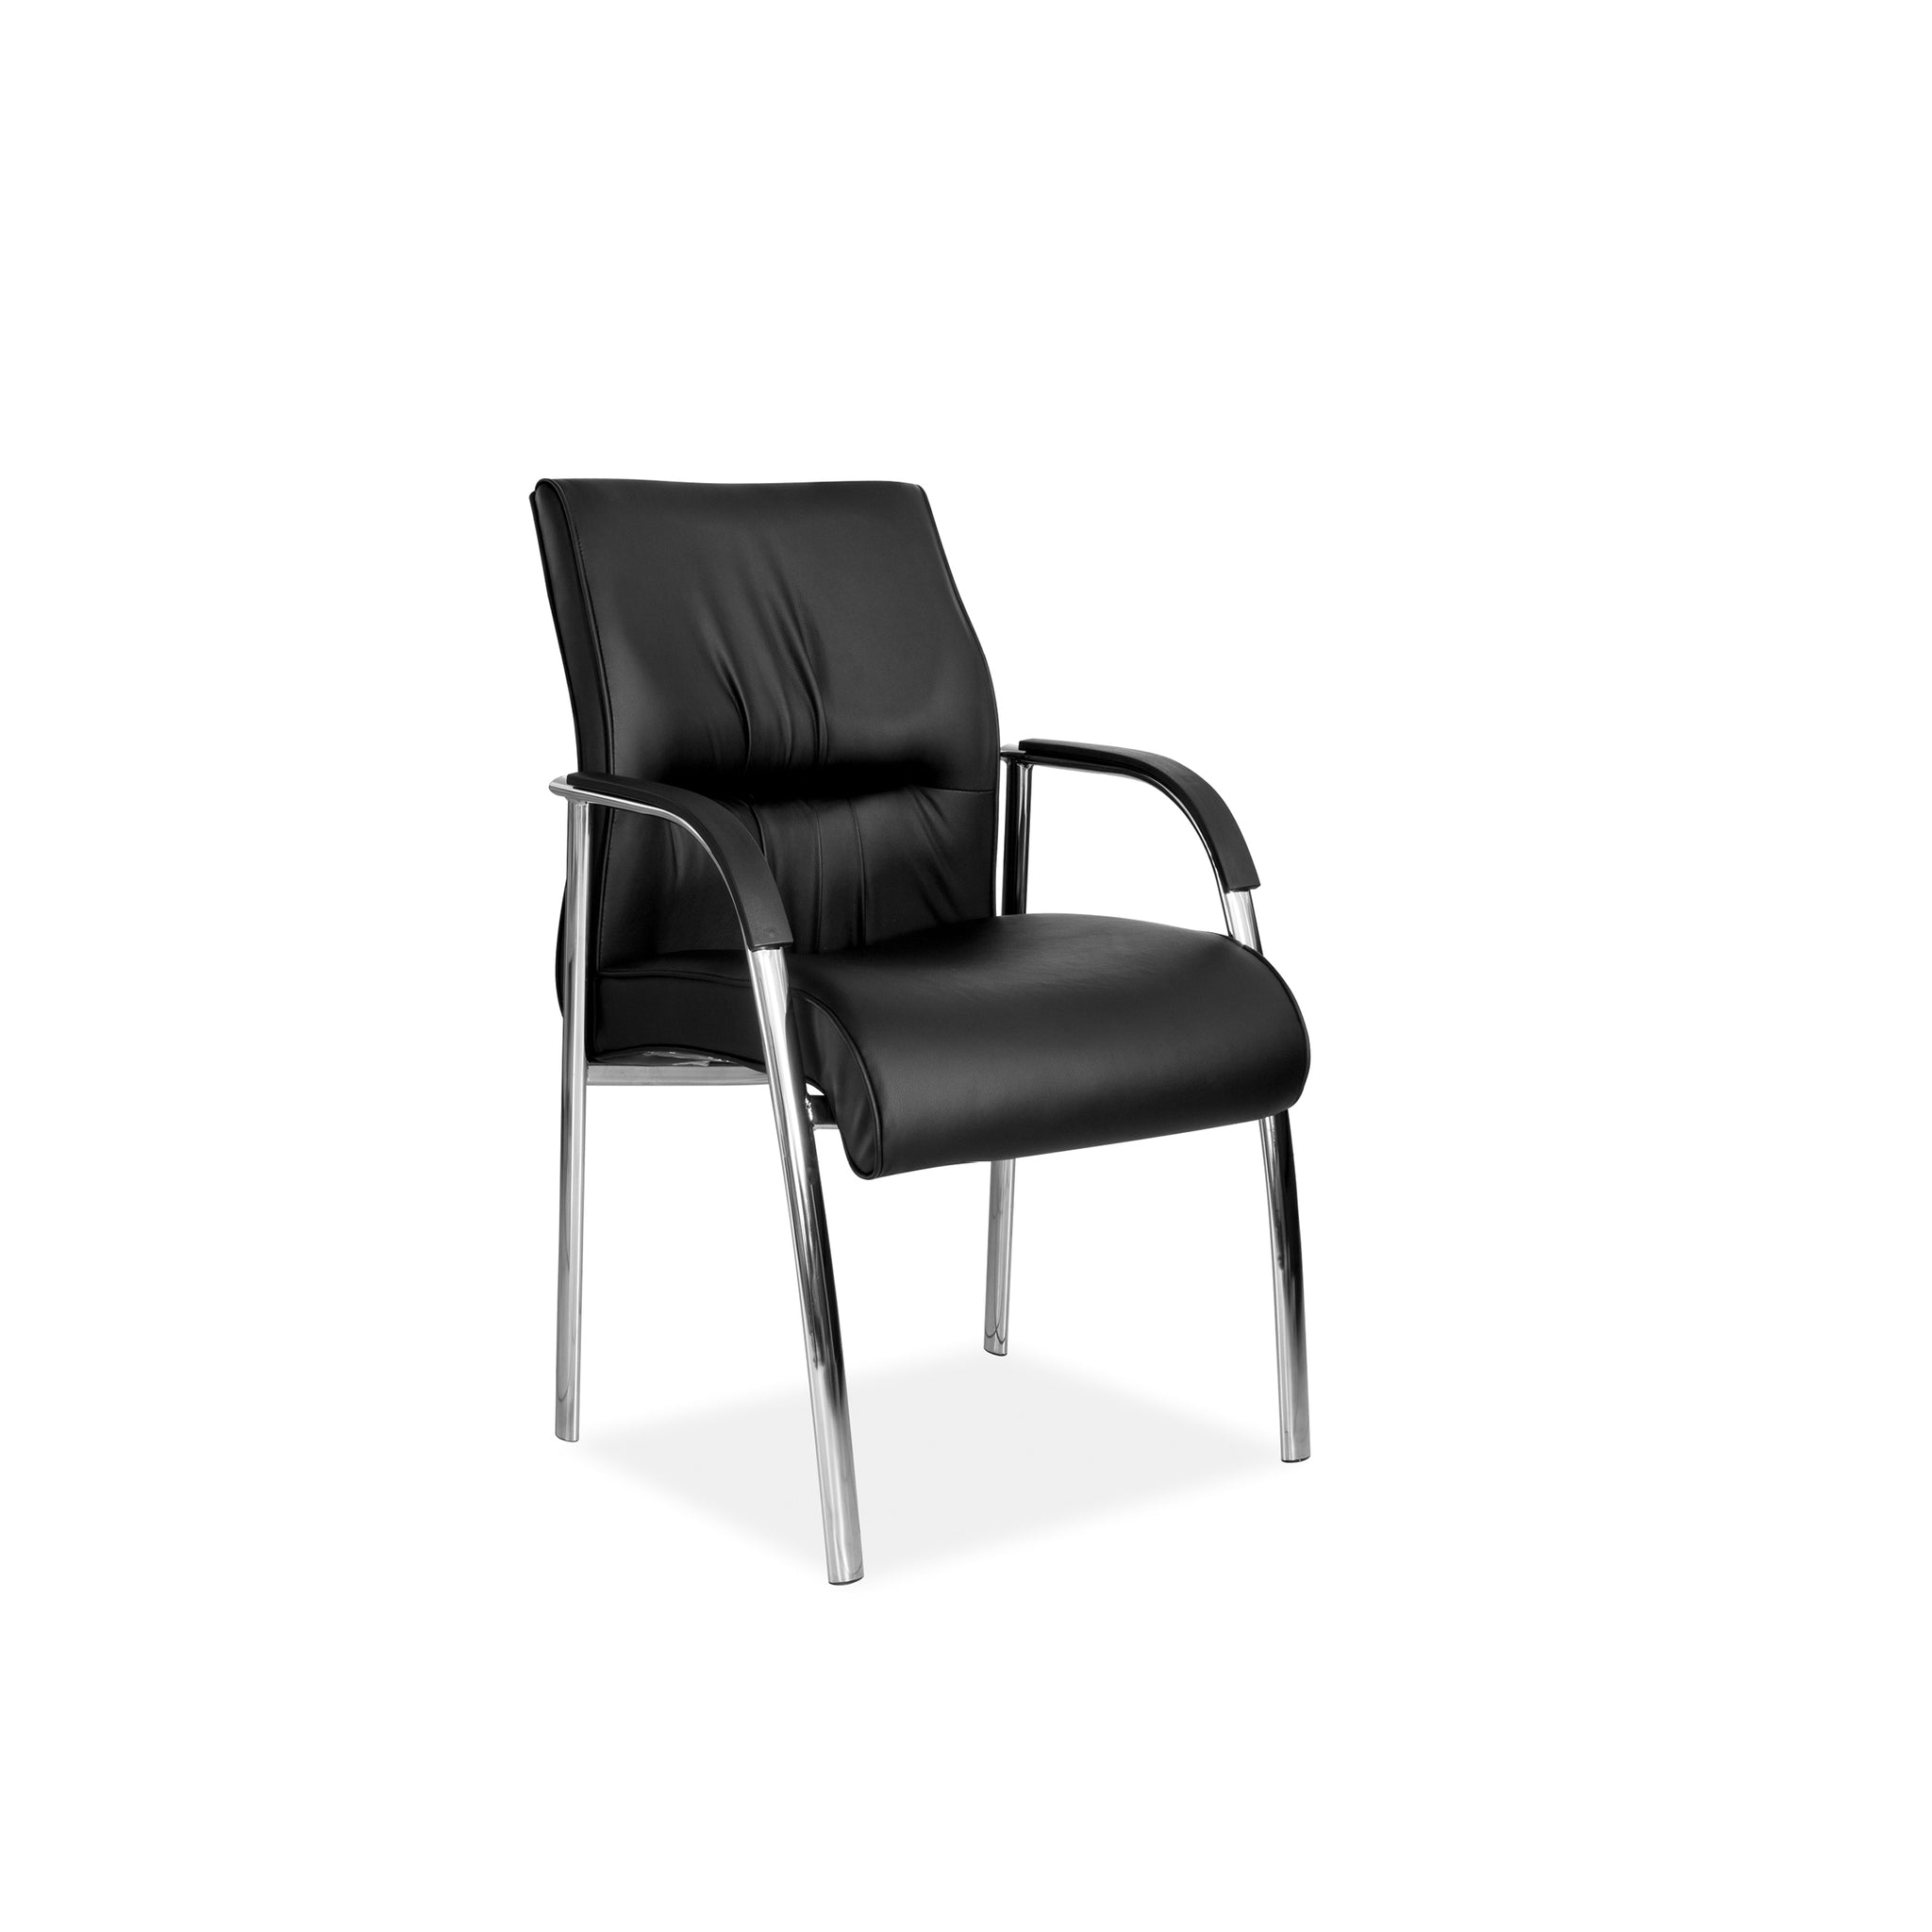 Hedcor Salvador Chrome office chair 4 legged